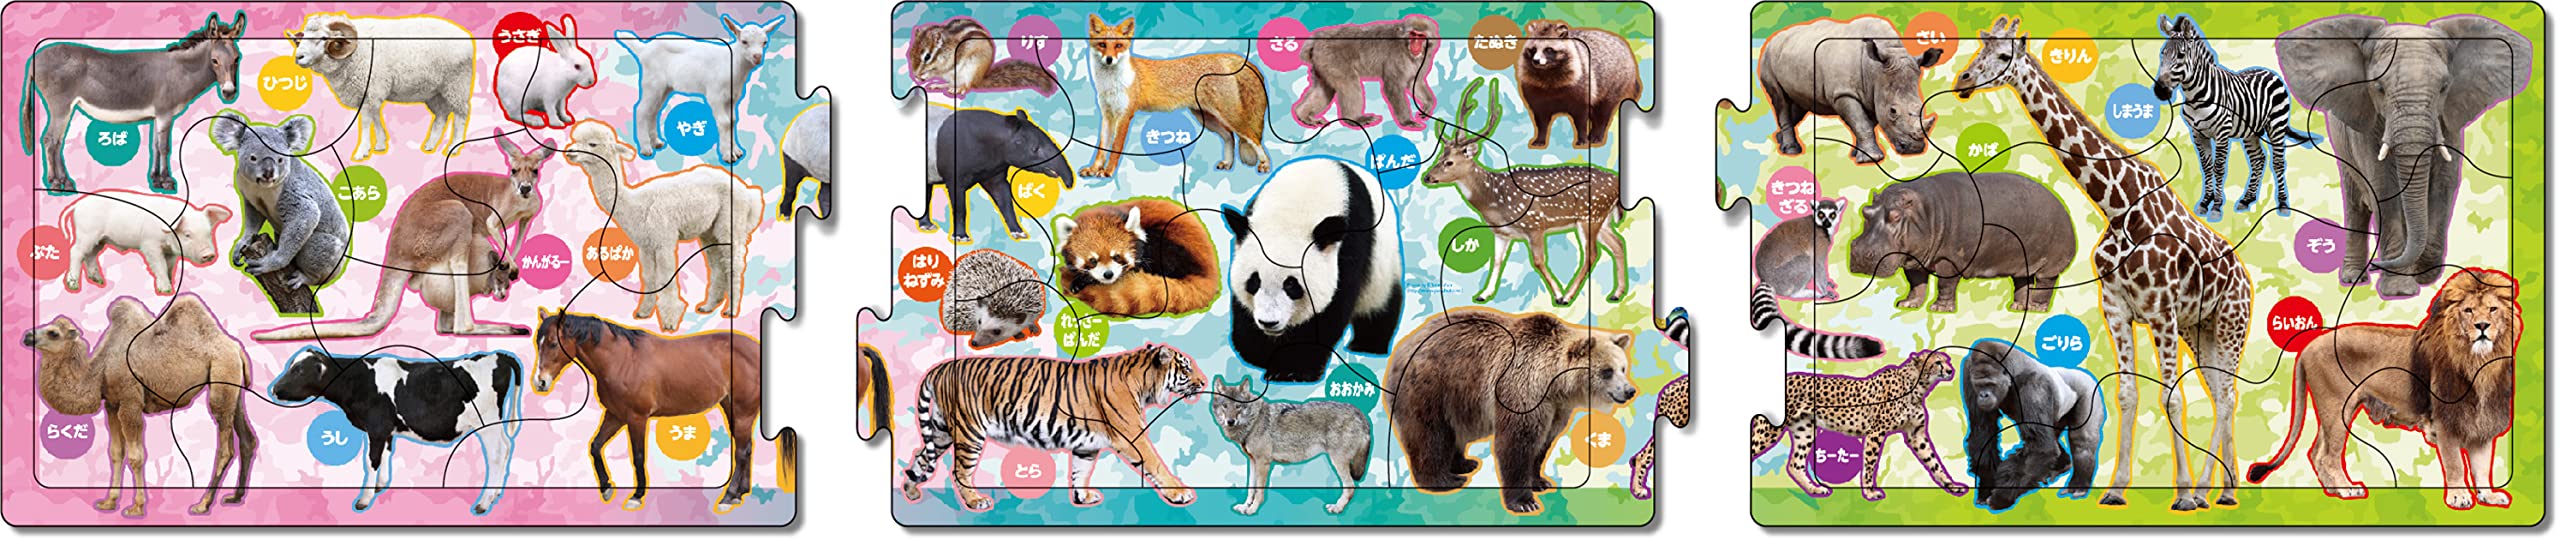 Apollo-Sha 24-165 Jigsaw Puzzle Zoo Animals Panorama Puzzle 8+12+16 Pieces